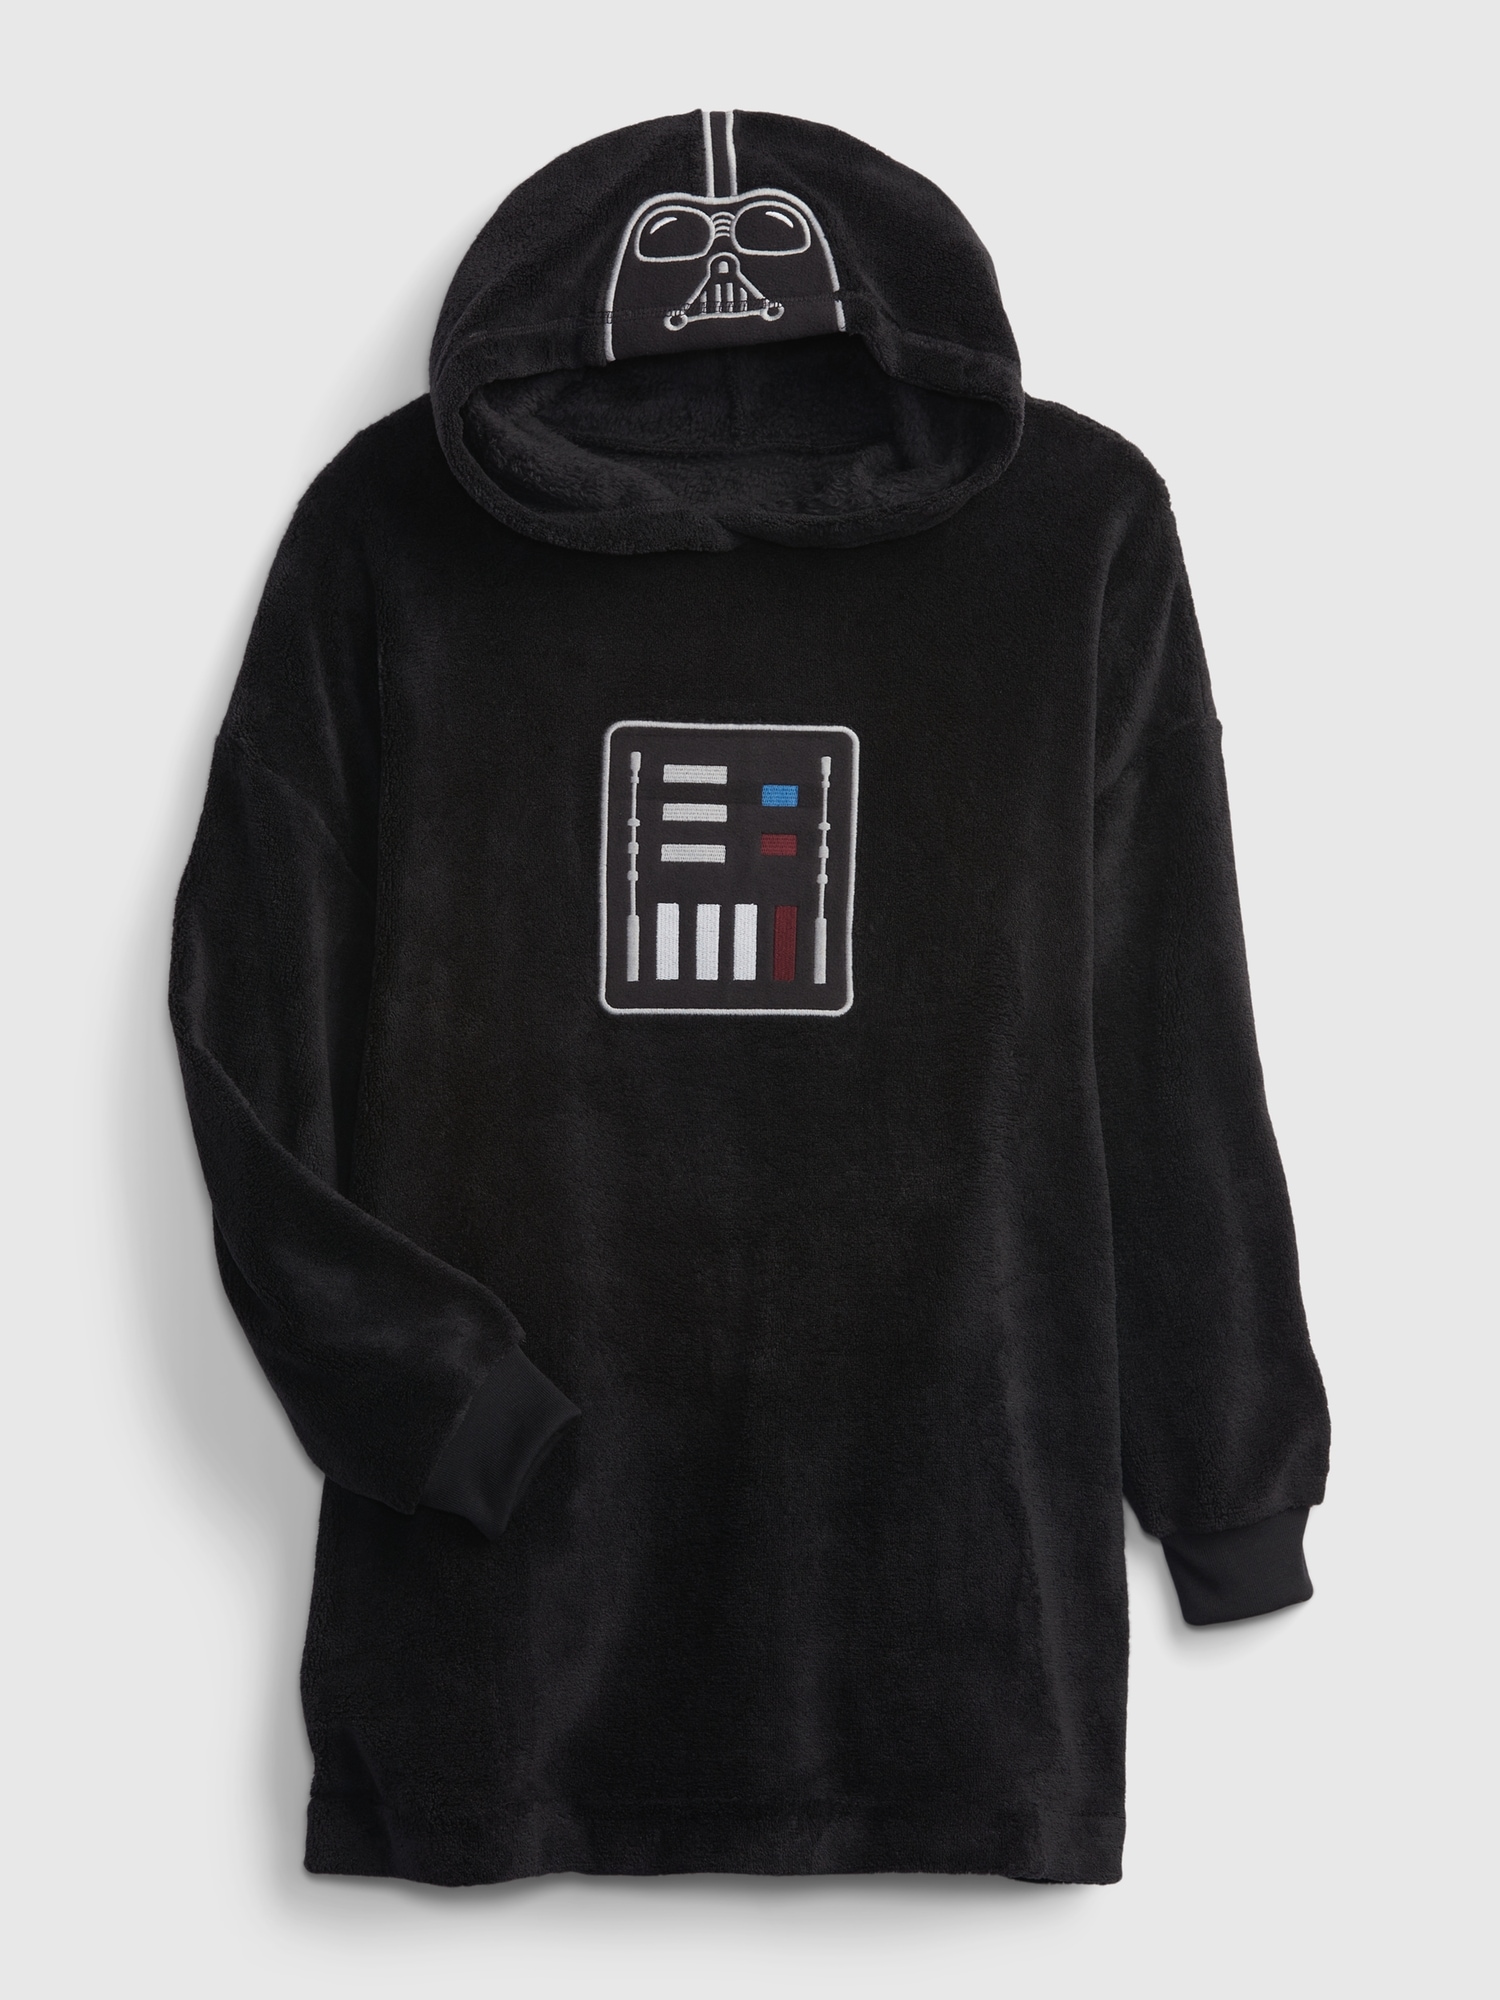 GapKids | Star Wars™ Darth Vader Graphic Sleep Hoodie | Gap